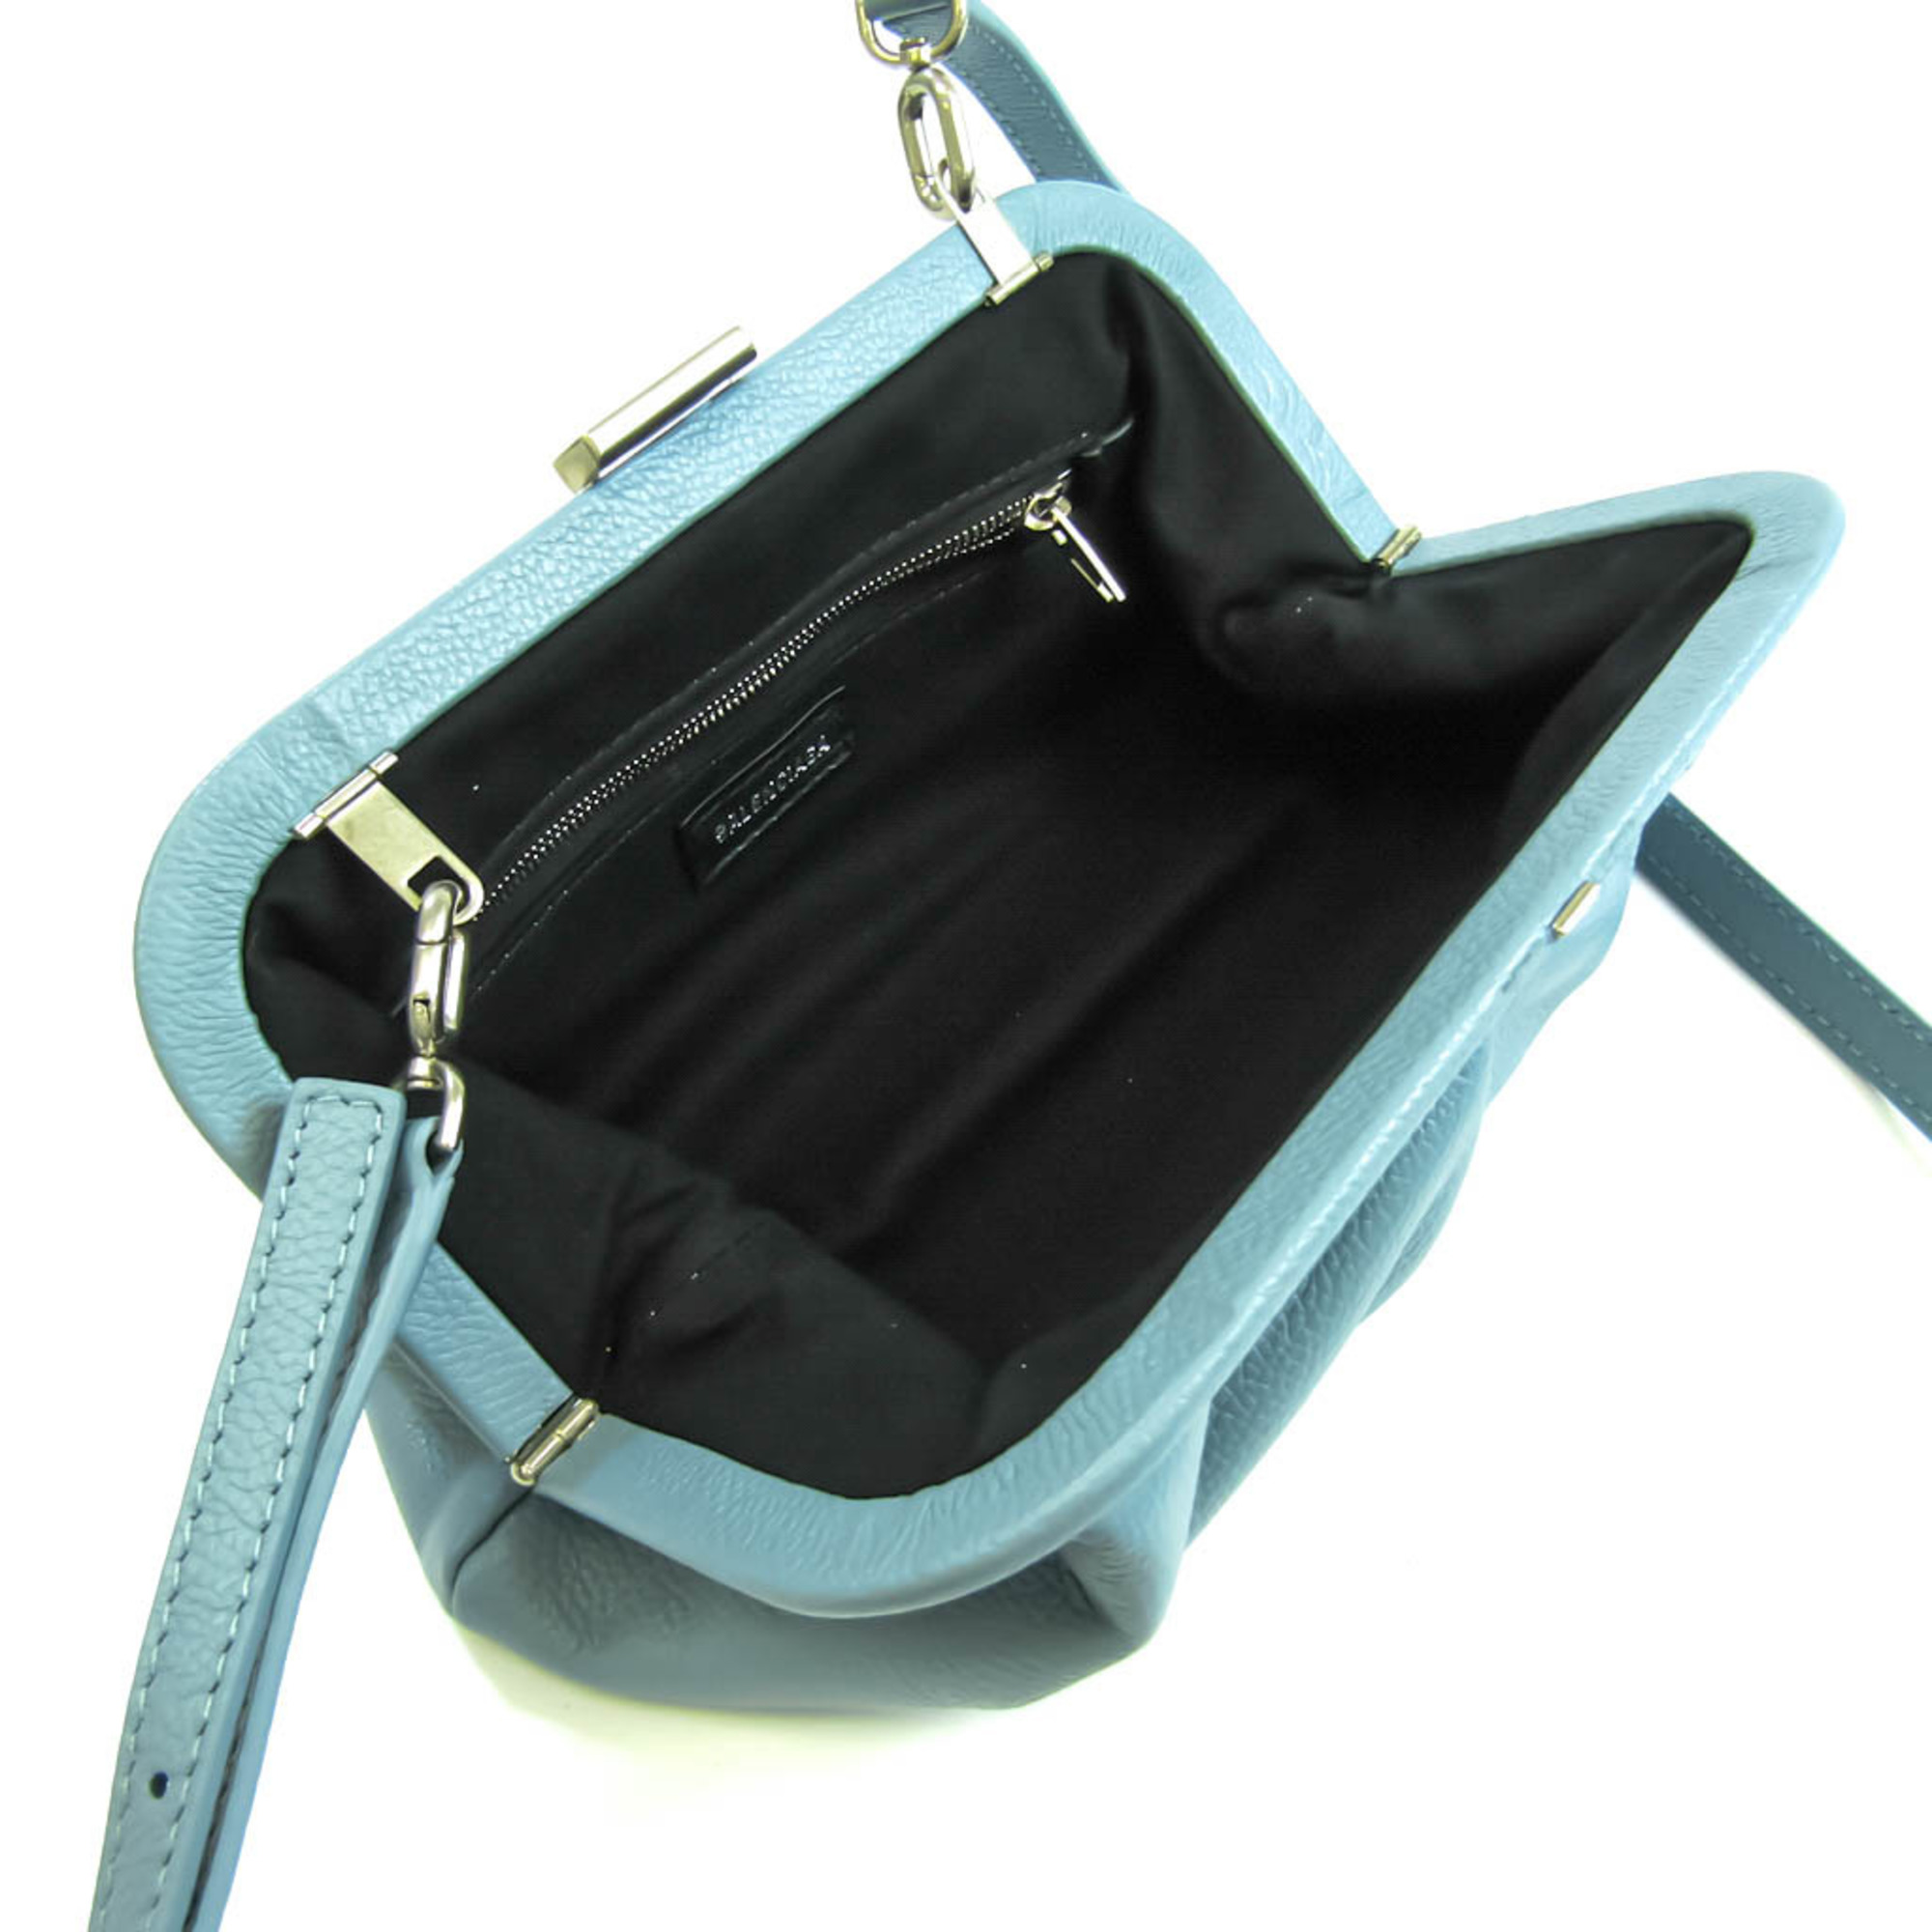 Balenciaga Japan Exclusive 618895 Women's Leather Shoulder Bag Light Blue